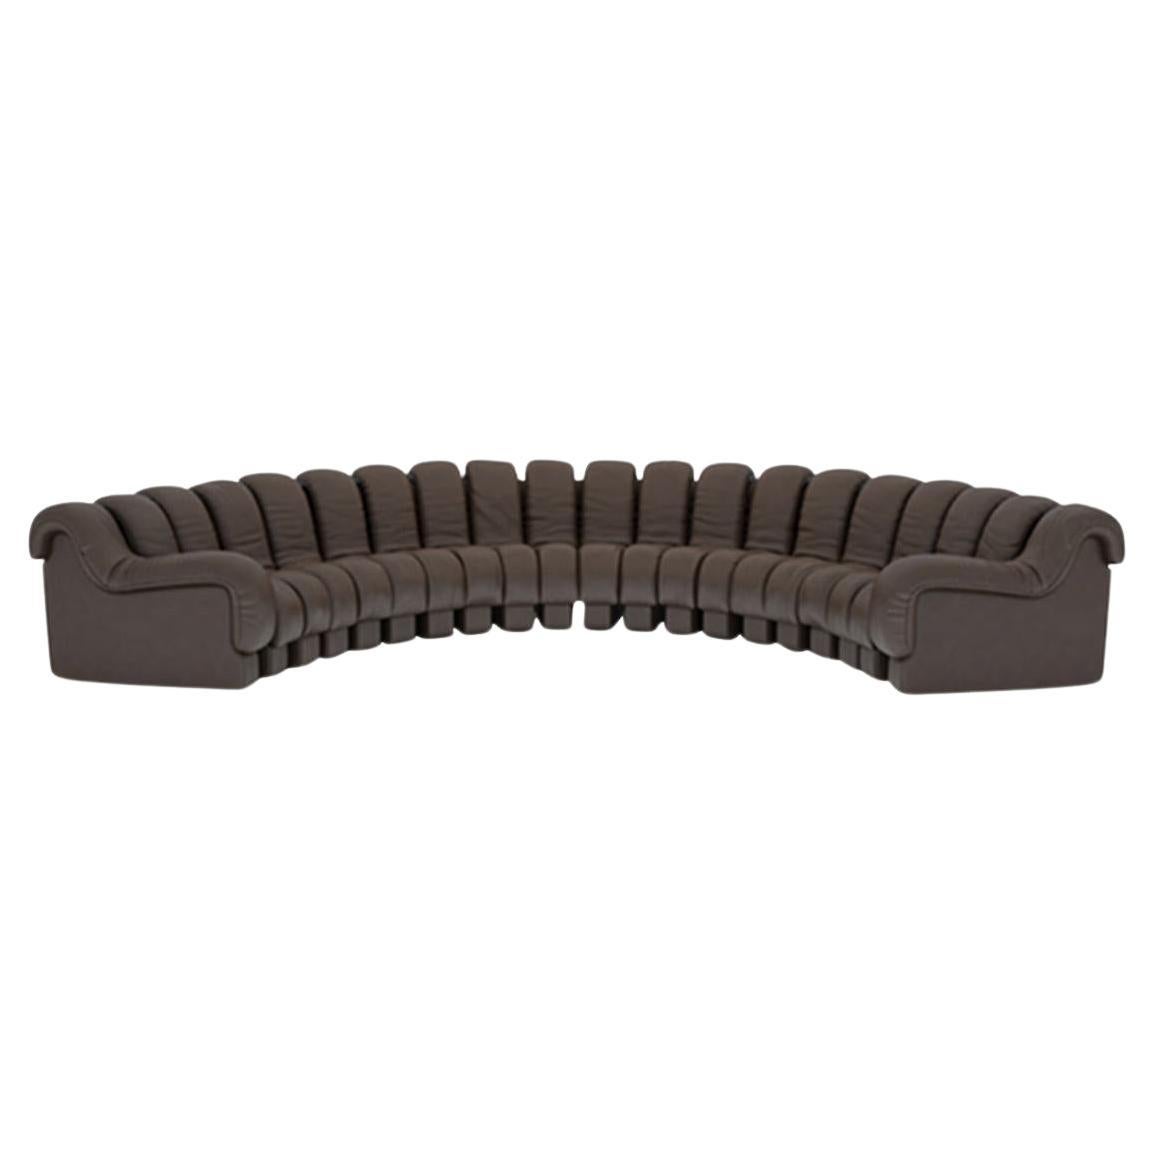 DeSede DS-600 “Non-stop” Modular Sofa in Espresso Leather & Adjustable Elements